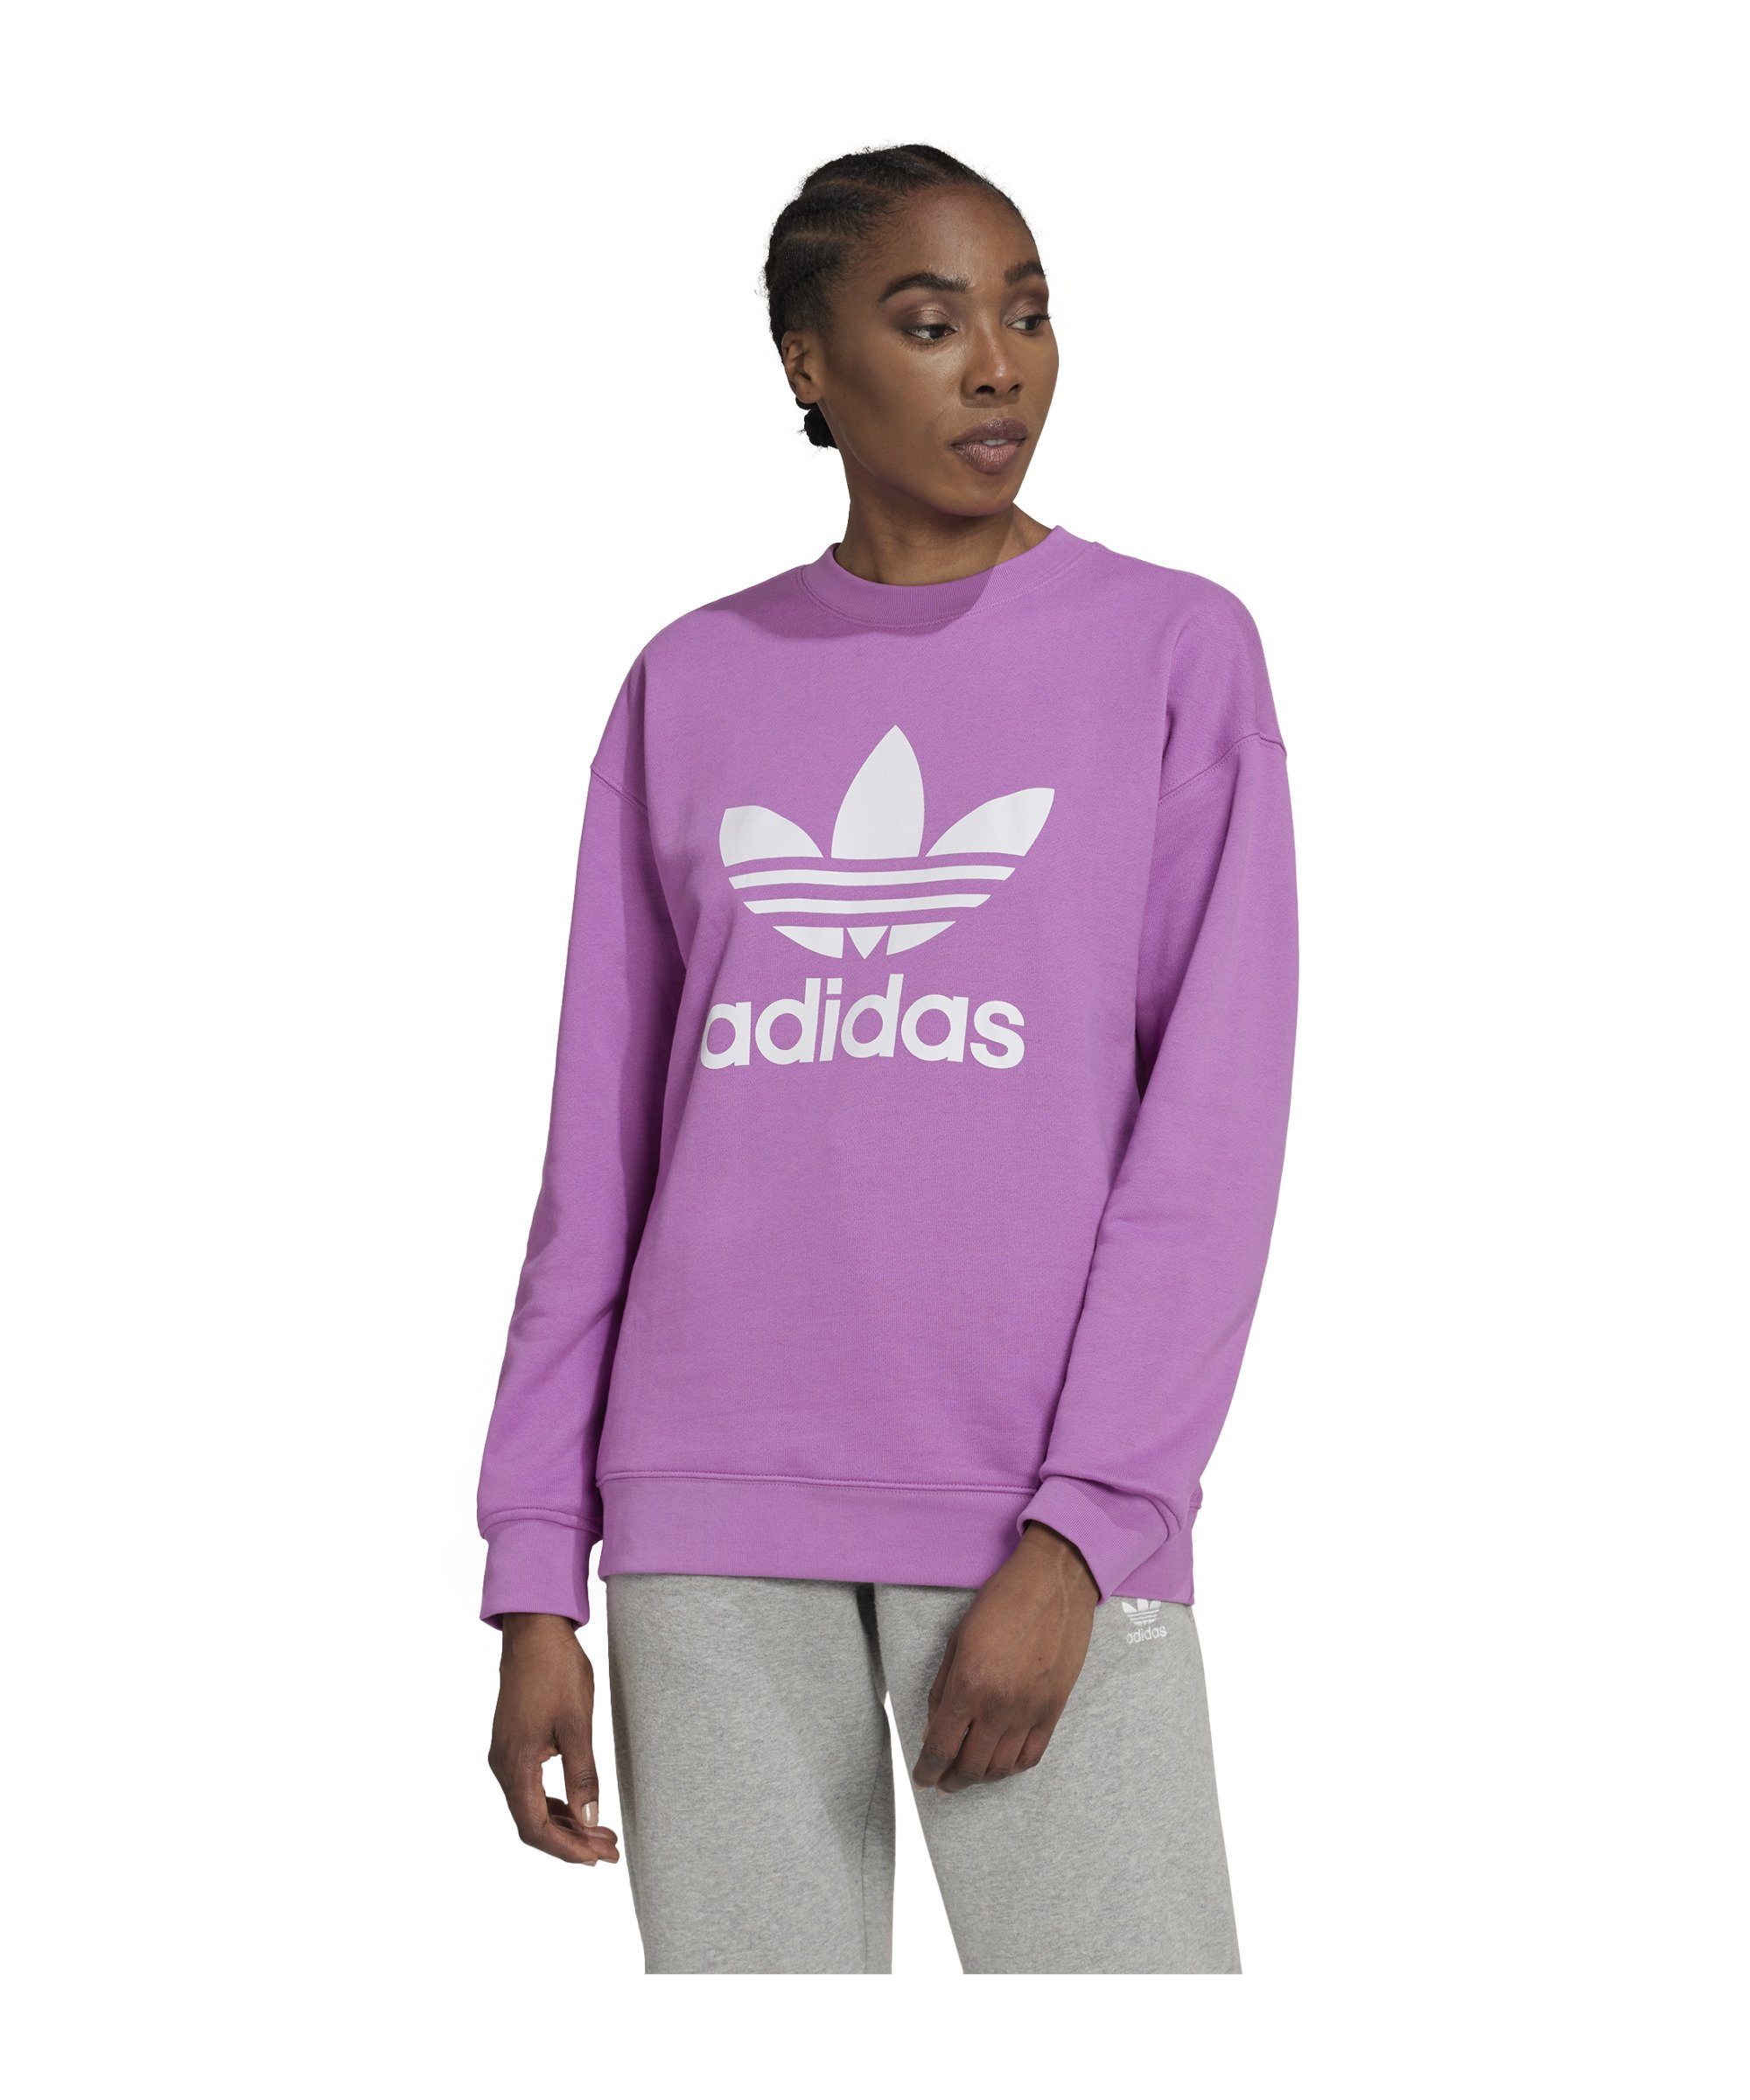 Sweater Trefoil Sweatshirt adidas Damen lila Originals